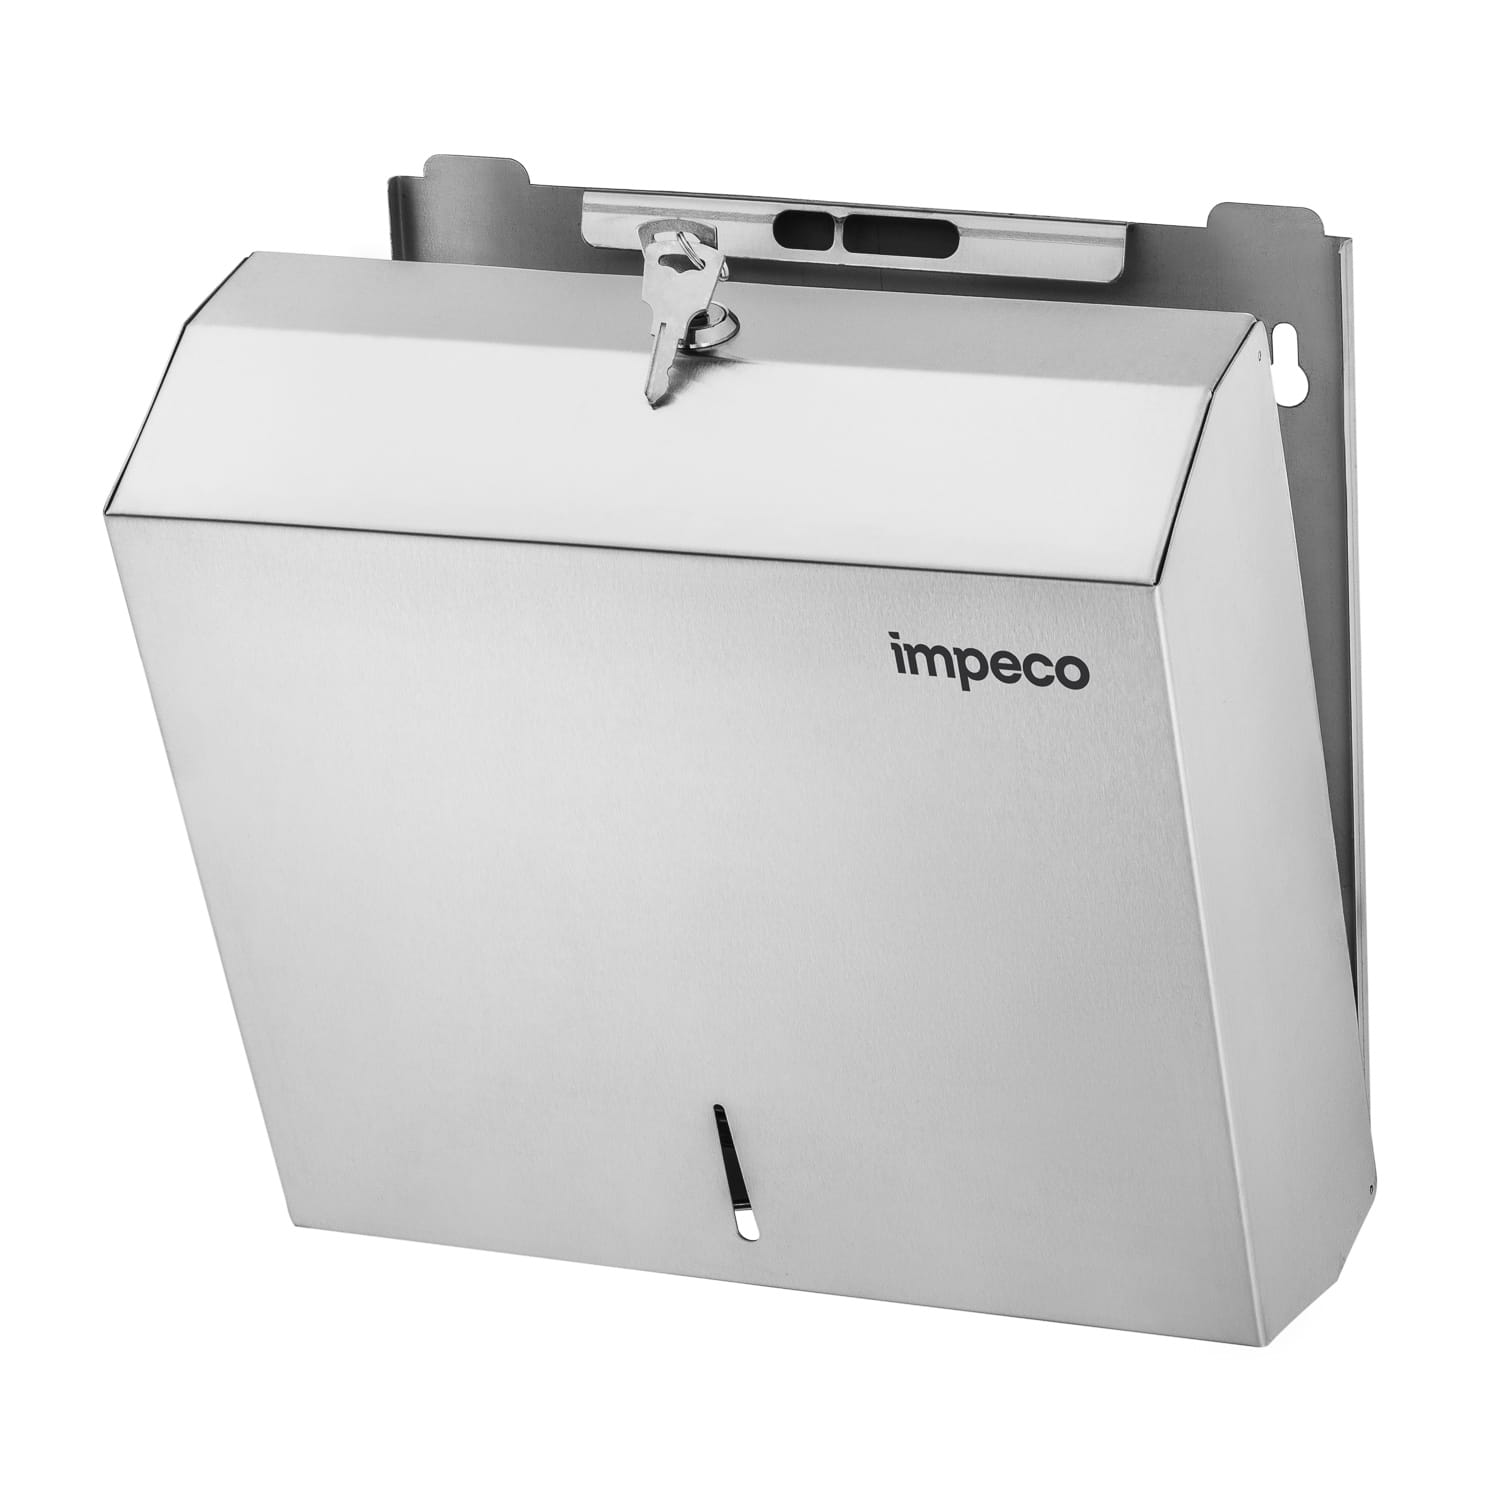 Paper towel dispenser Mini, Impeco - stainless steel